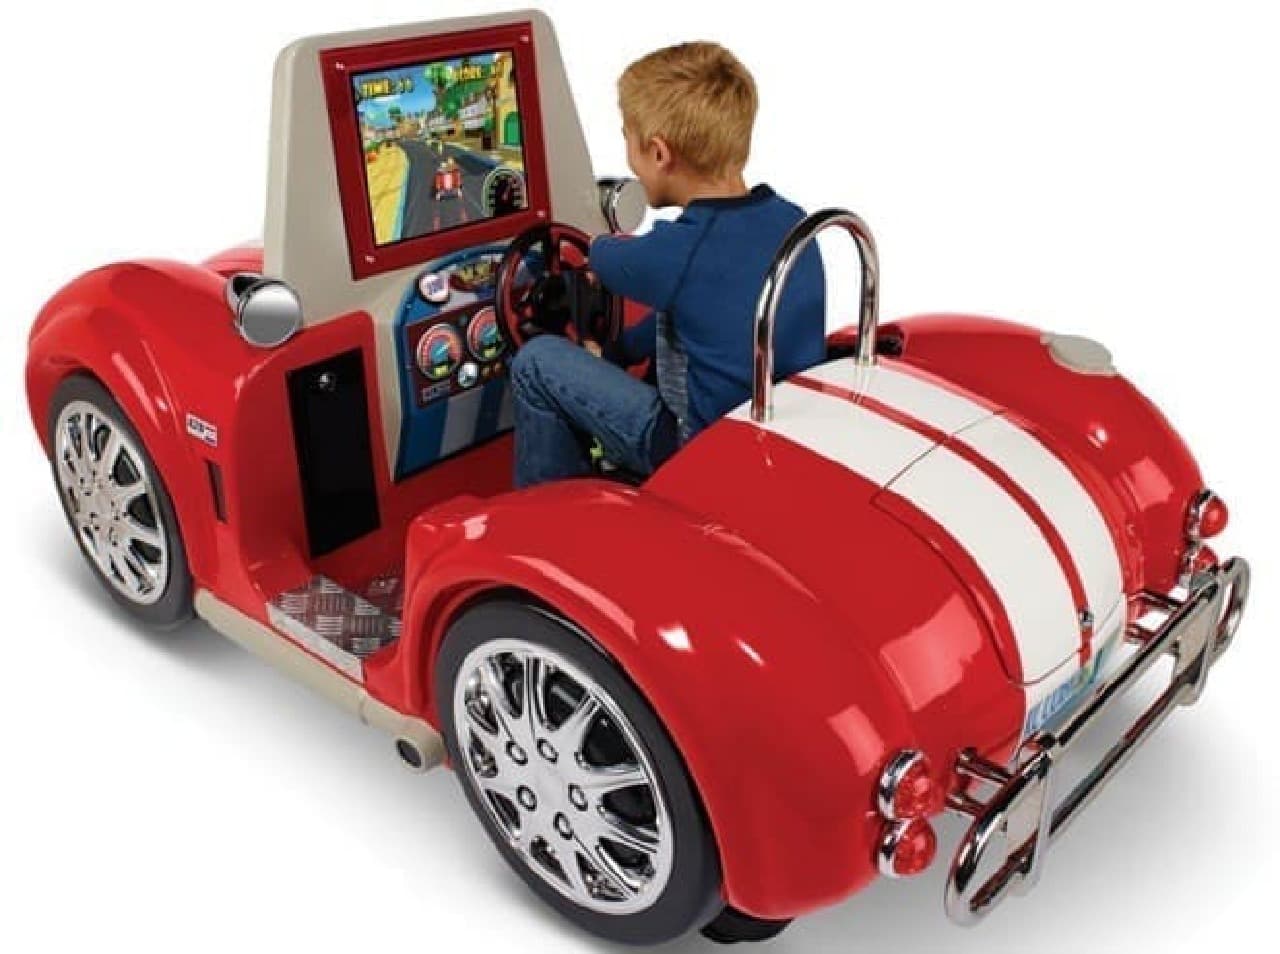 "The Arcade Mini Roadster Simulator" with plenty of realism